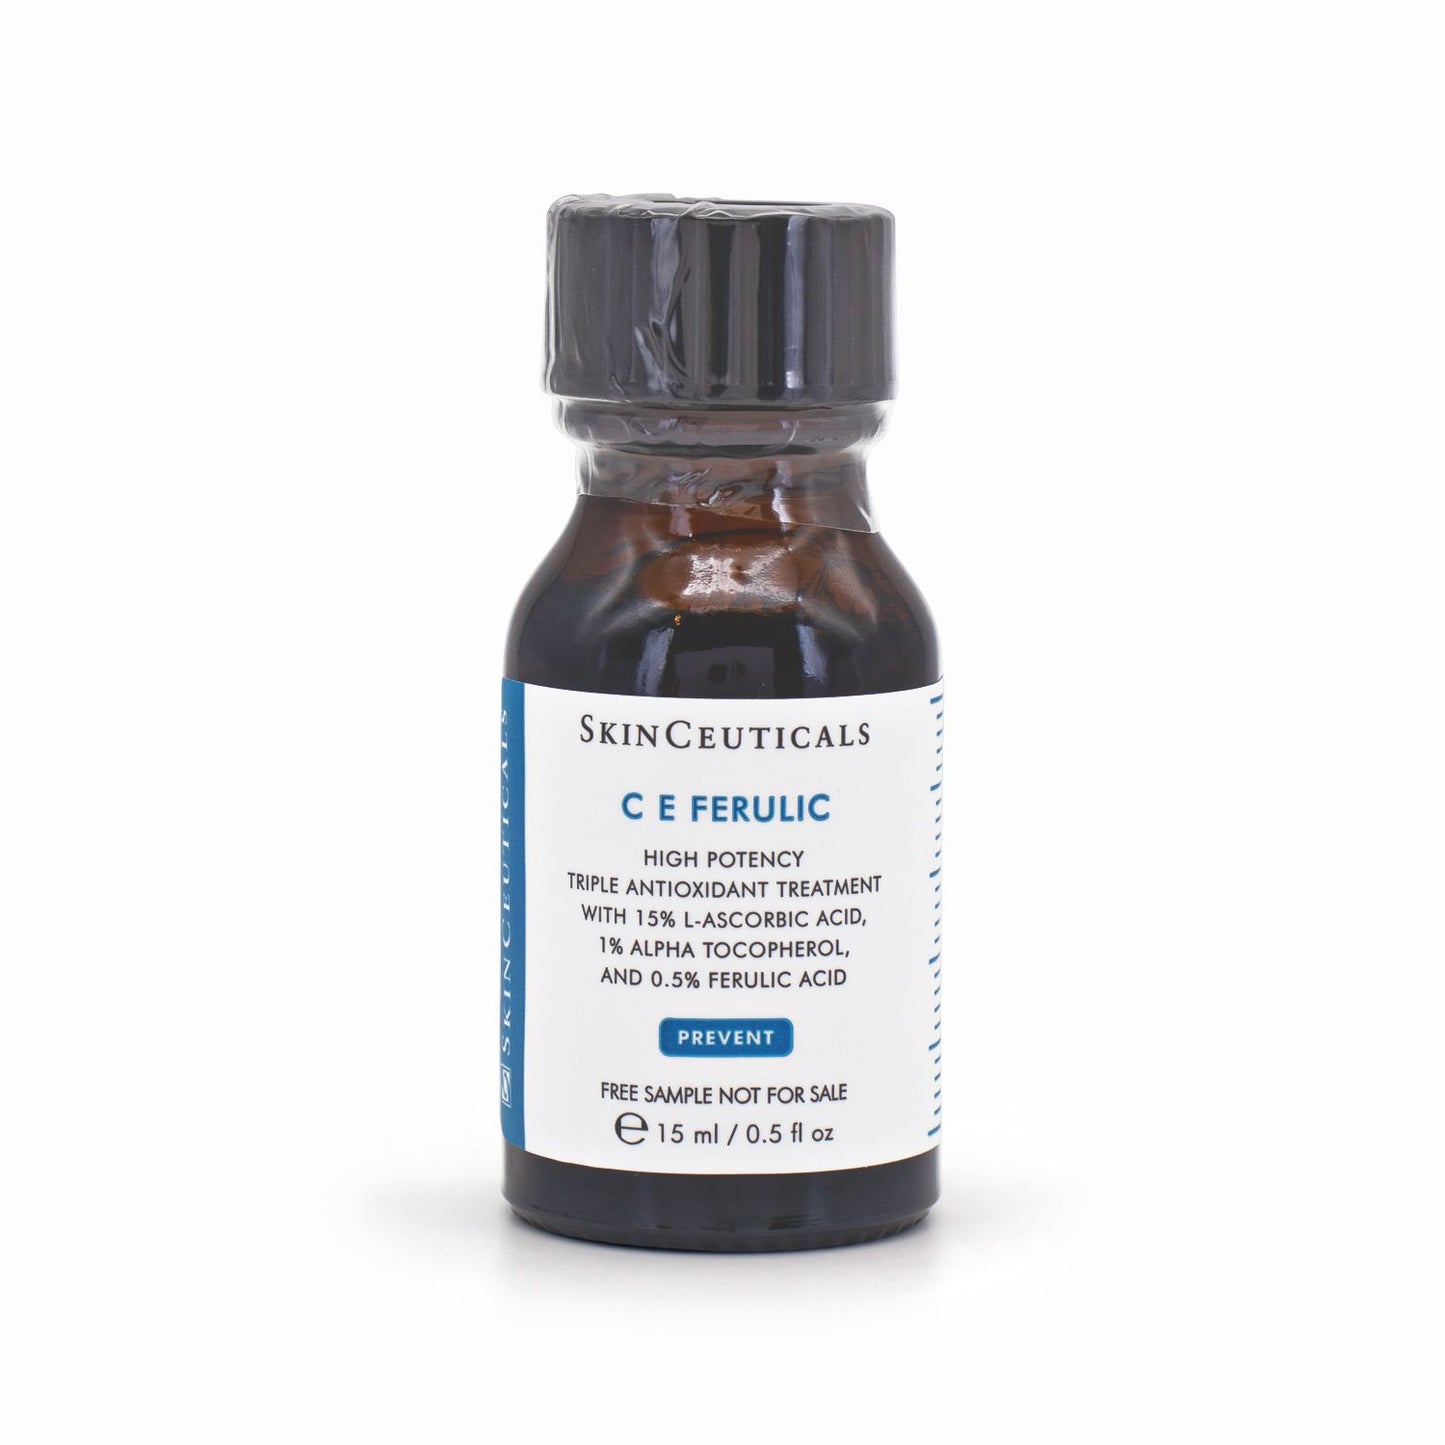 SkinCeuticals C E Ferulic Antioxidant Treatment 15ml - Imperfect Box